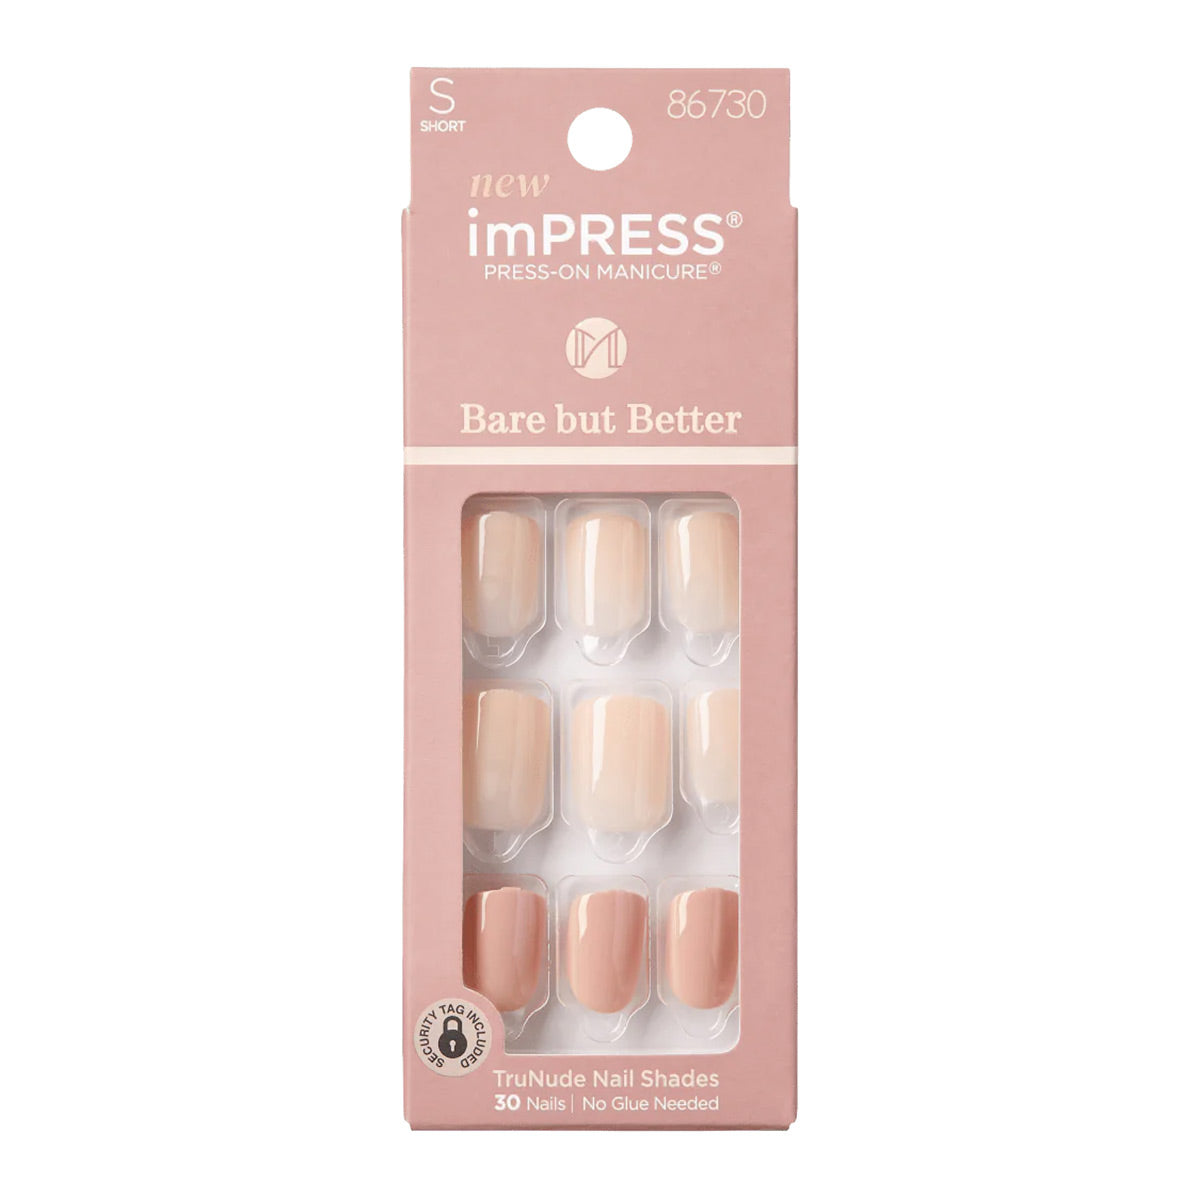 Kiss imPRESS Press-On Manicure Bare But Better | Simple Pleasure